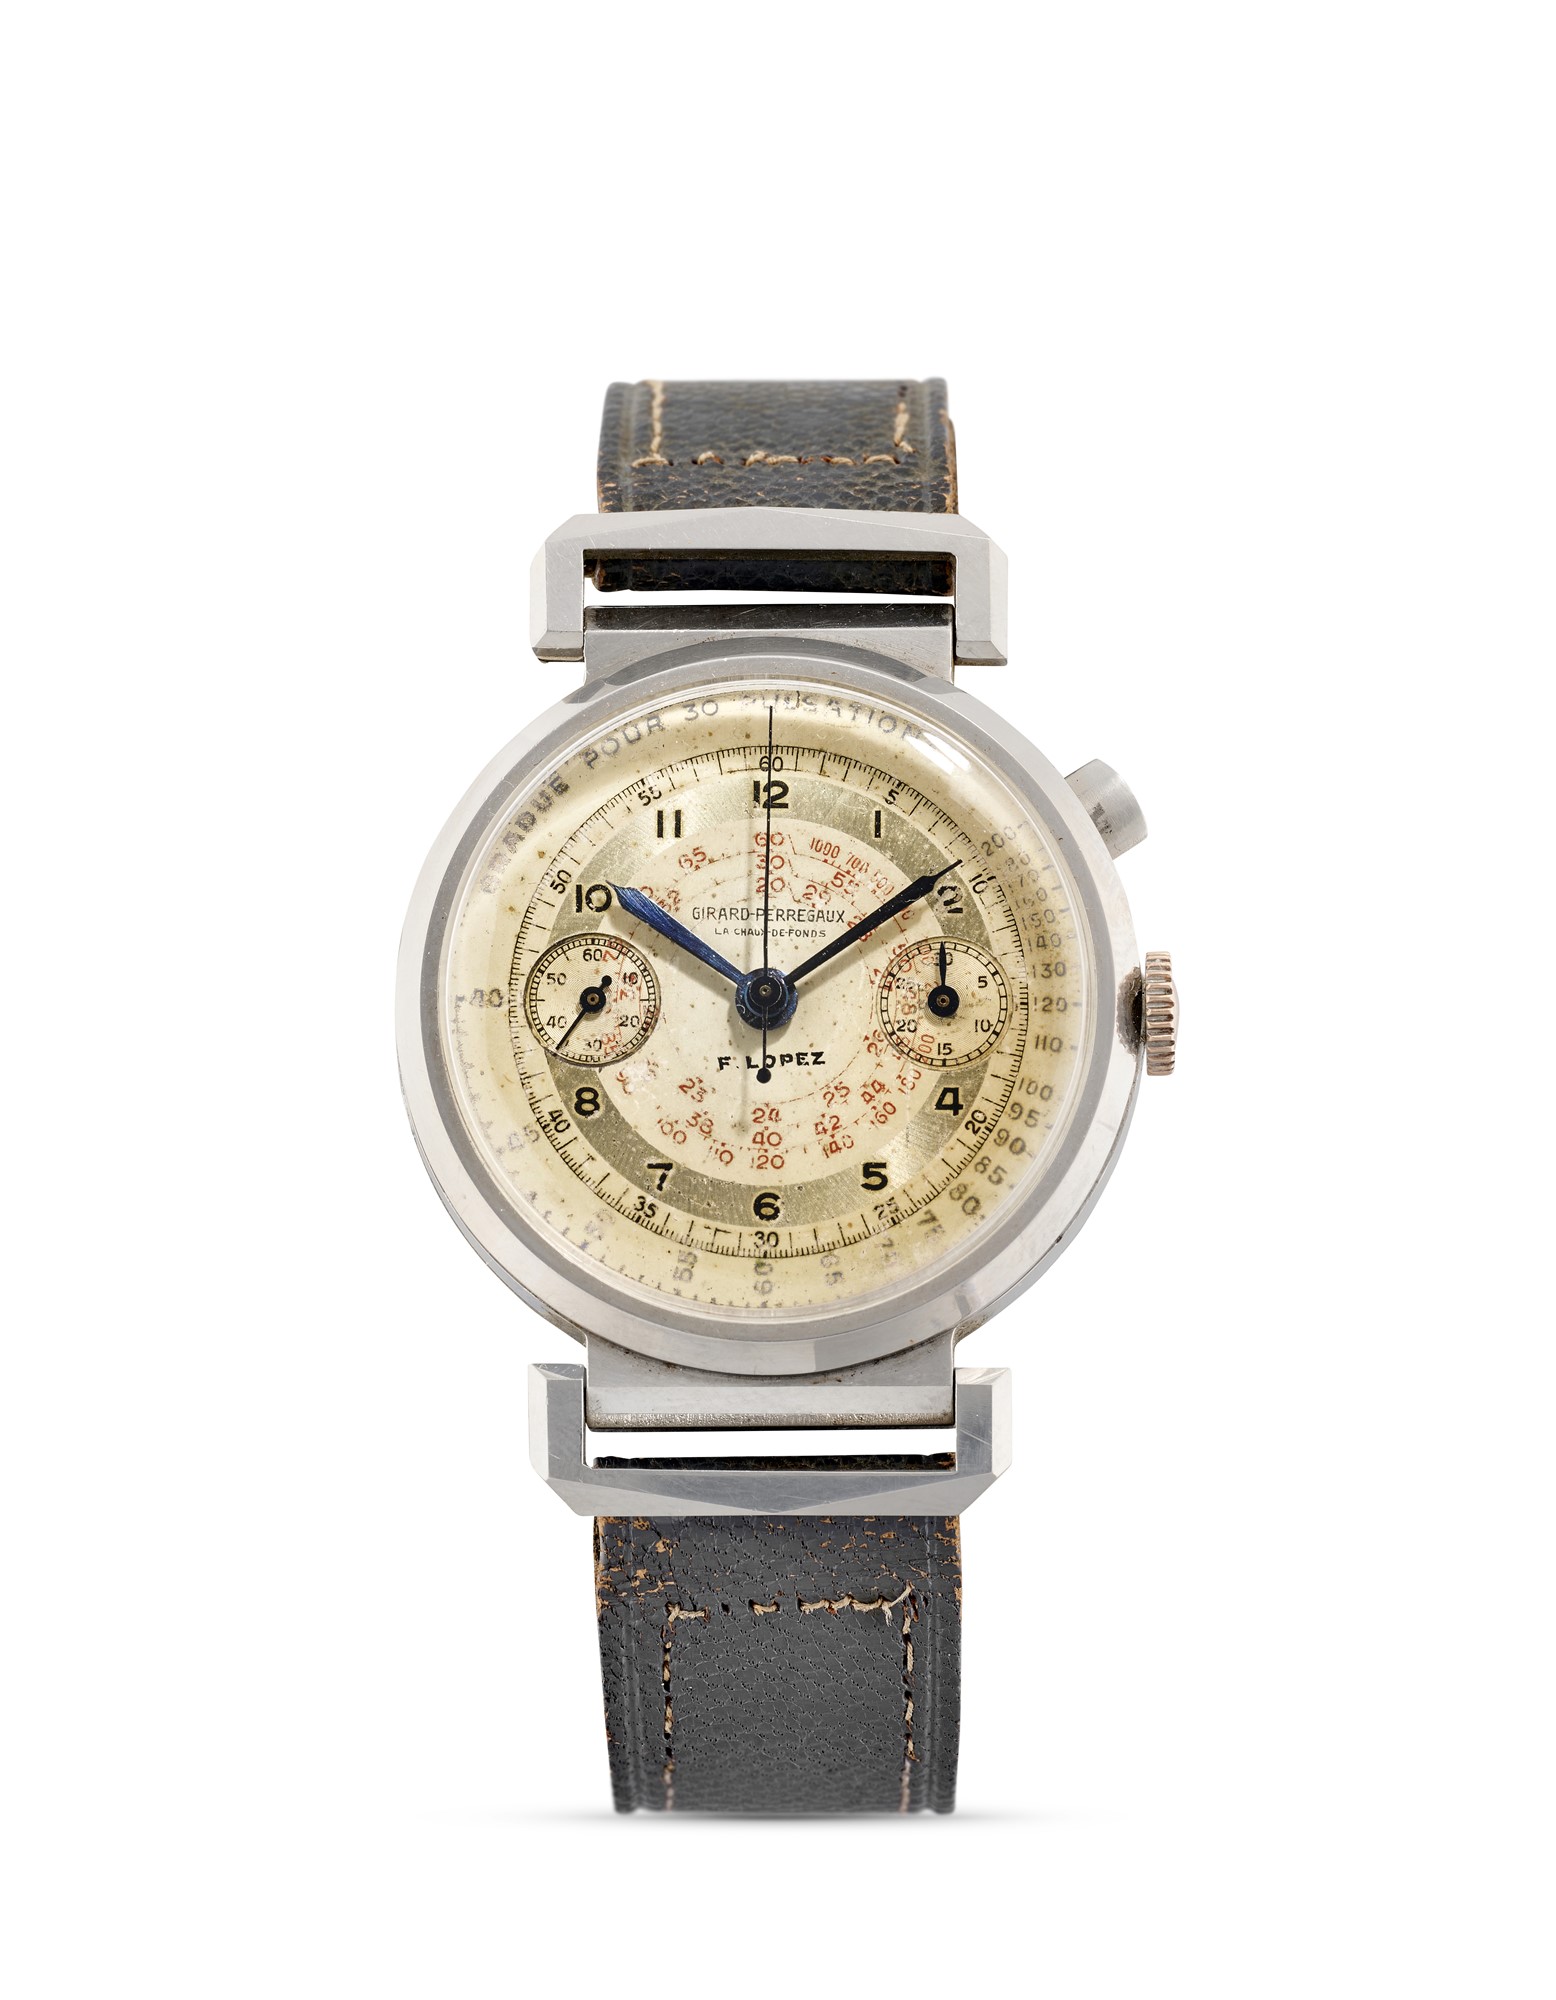 Girard Perregaux chronograph retailed by F.Lopez, 40s